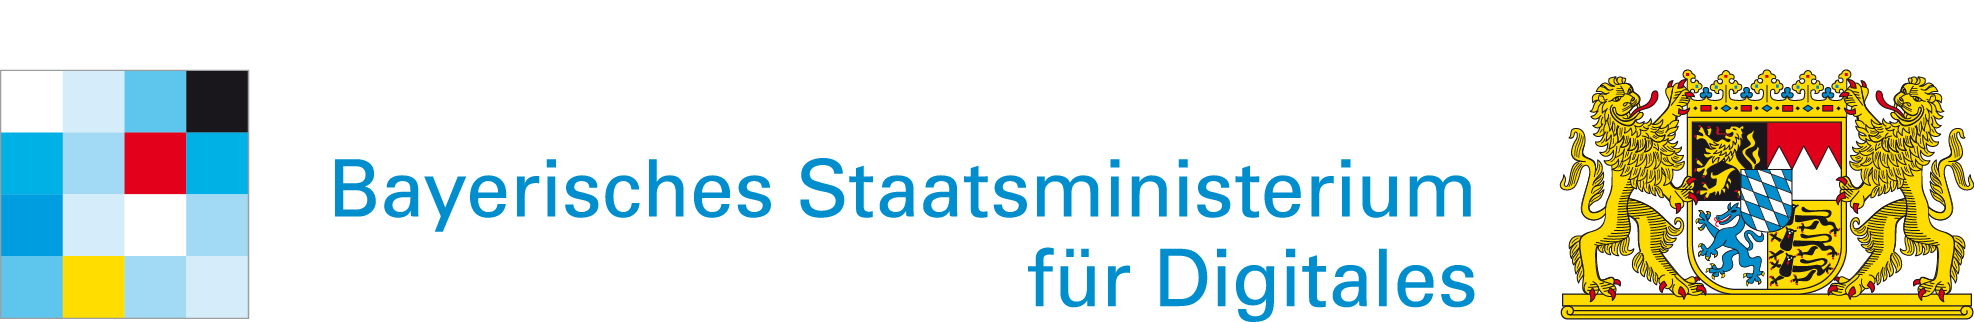 bayr.staatsministerium digitales logo